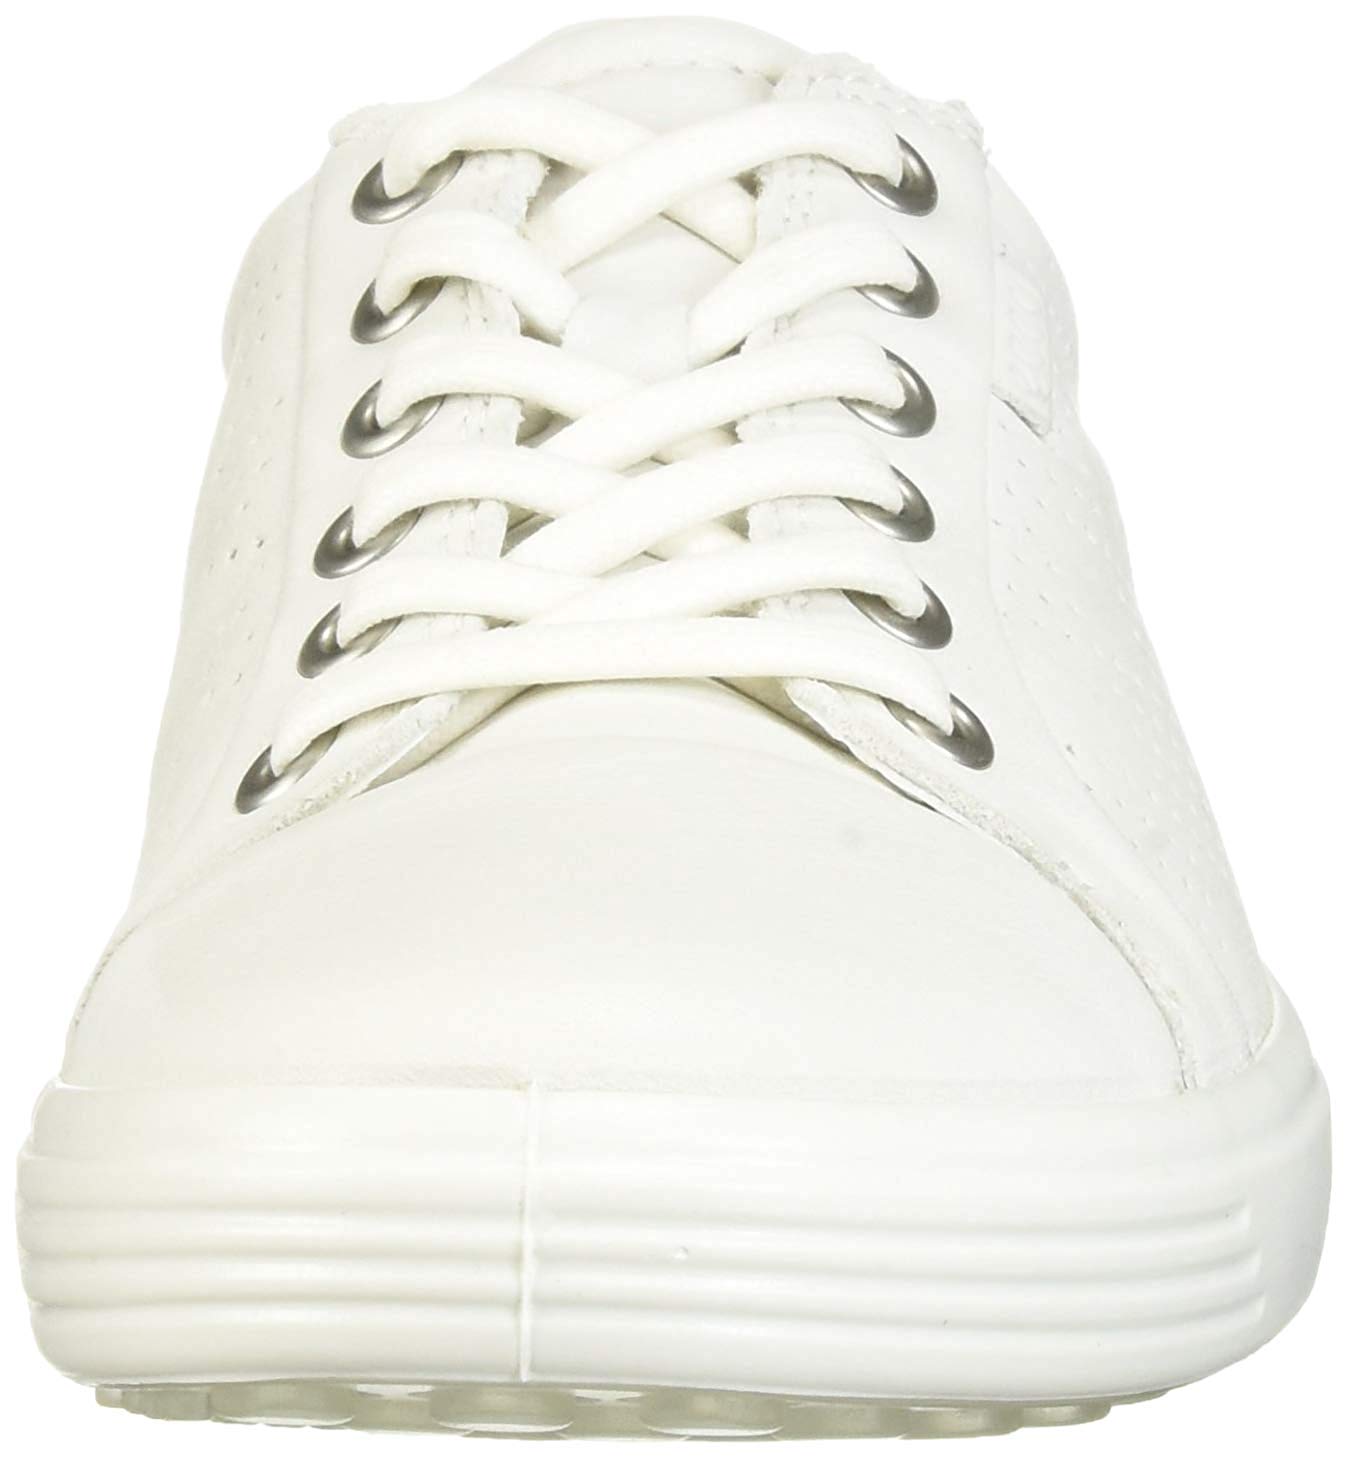 ECCO Women's Soft 7 Sneaker, White Perforated, Size 9.0 PXC7 | eBay